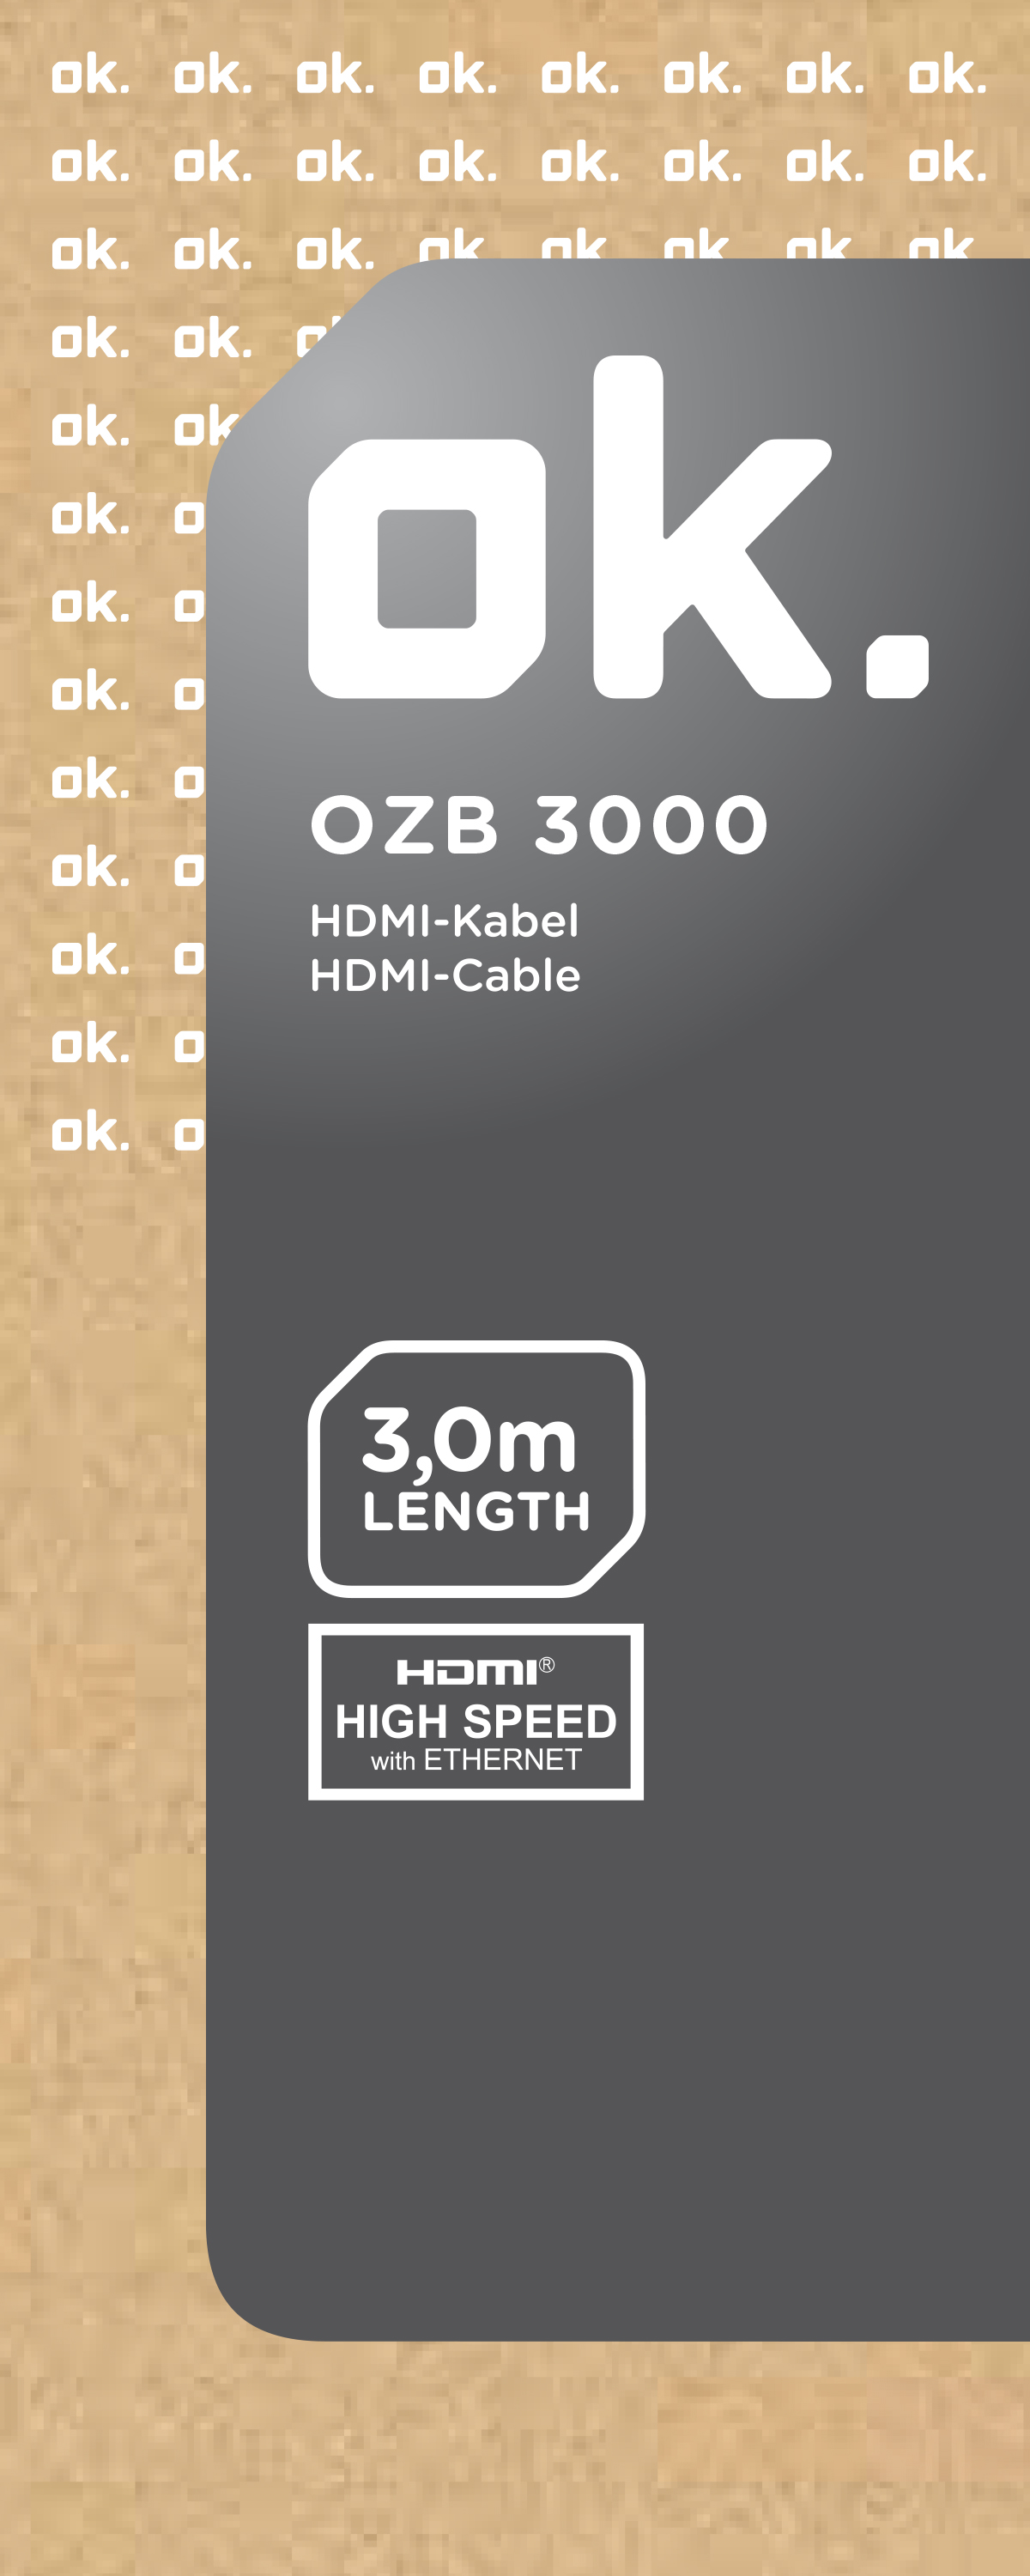 mit Ethernet, 3 HDMI-Kabel Highspeed OK. m OZB-3000,